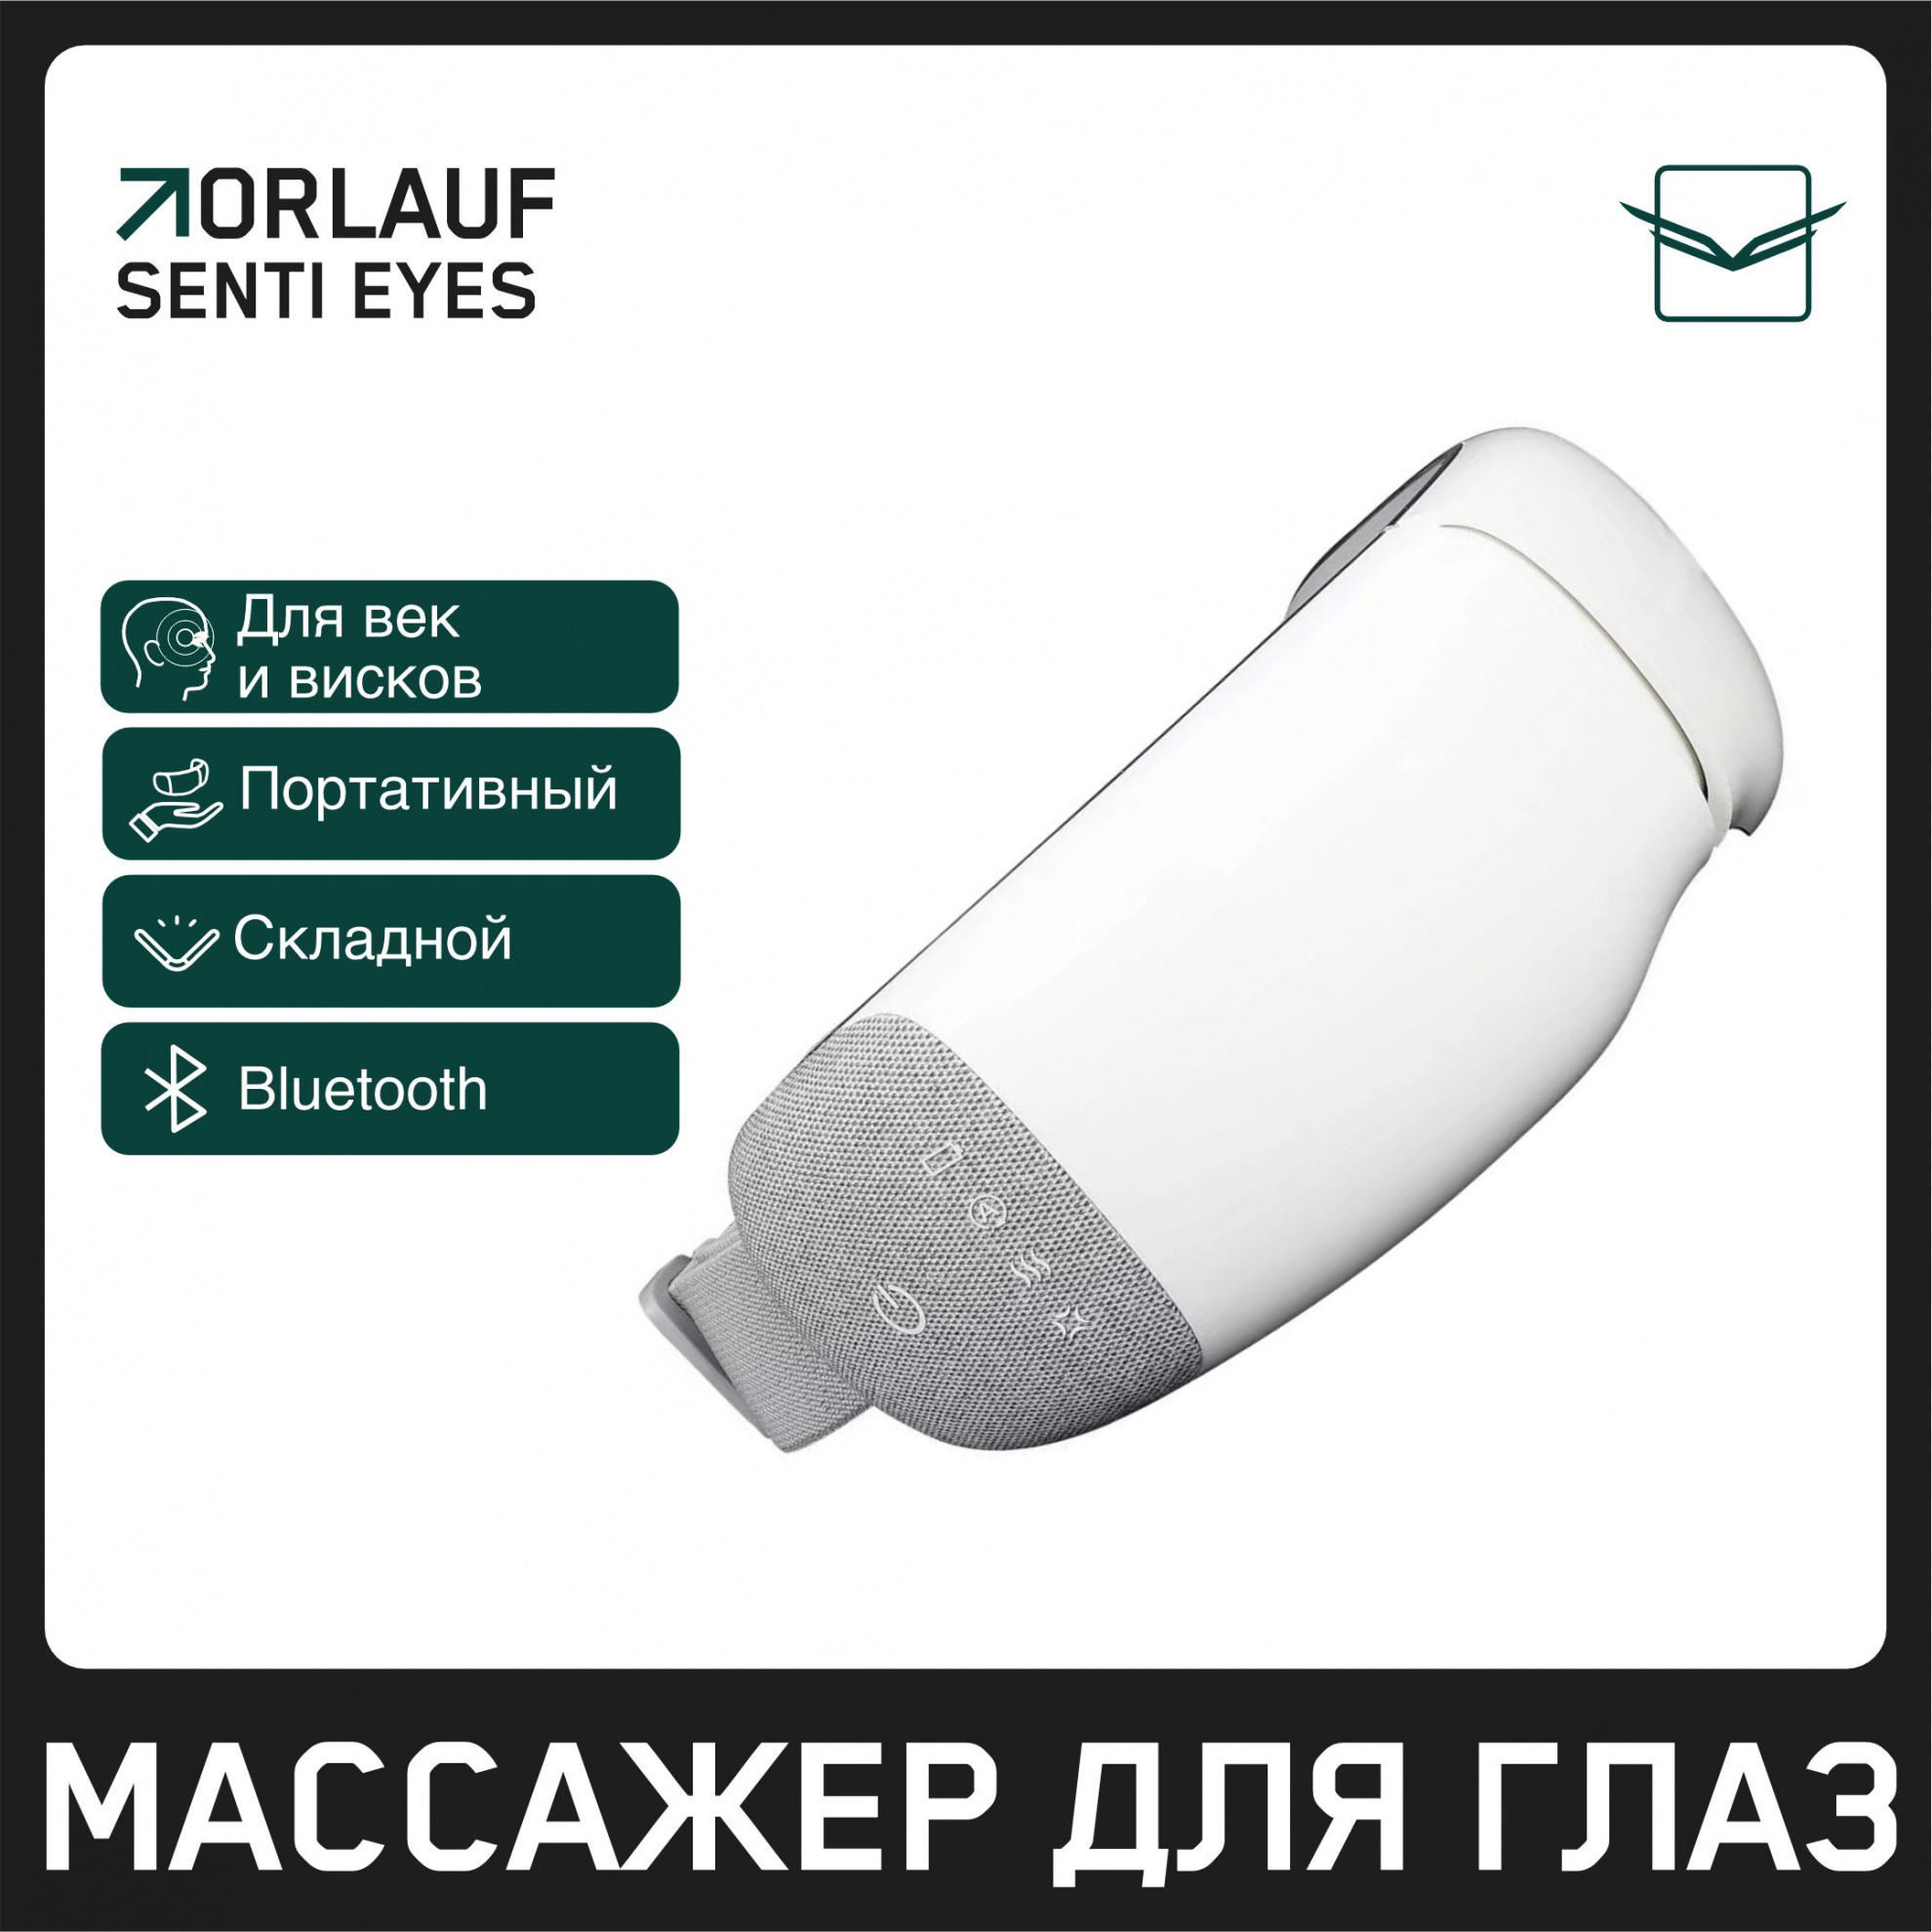 Senti Eyes в Москве по цене 9400 ₽ в категории каталог Orlauf